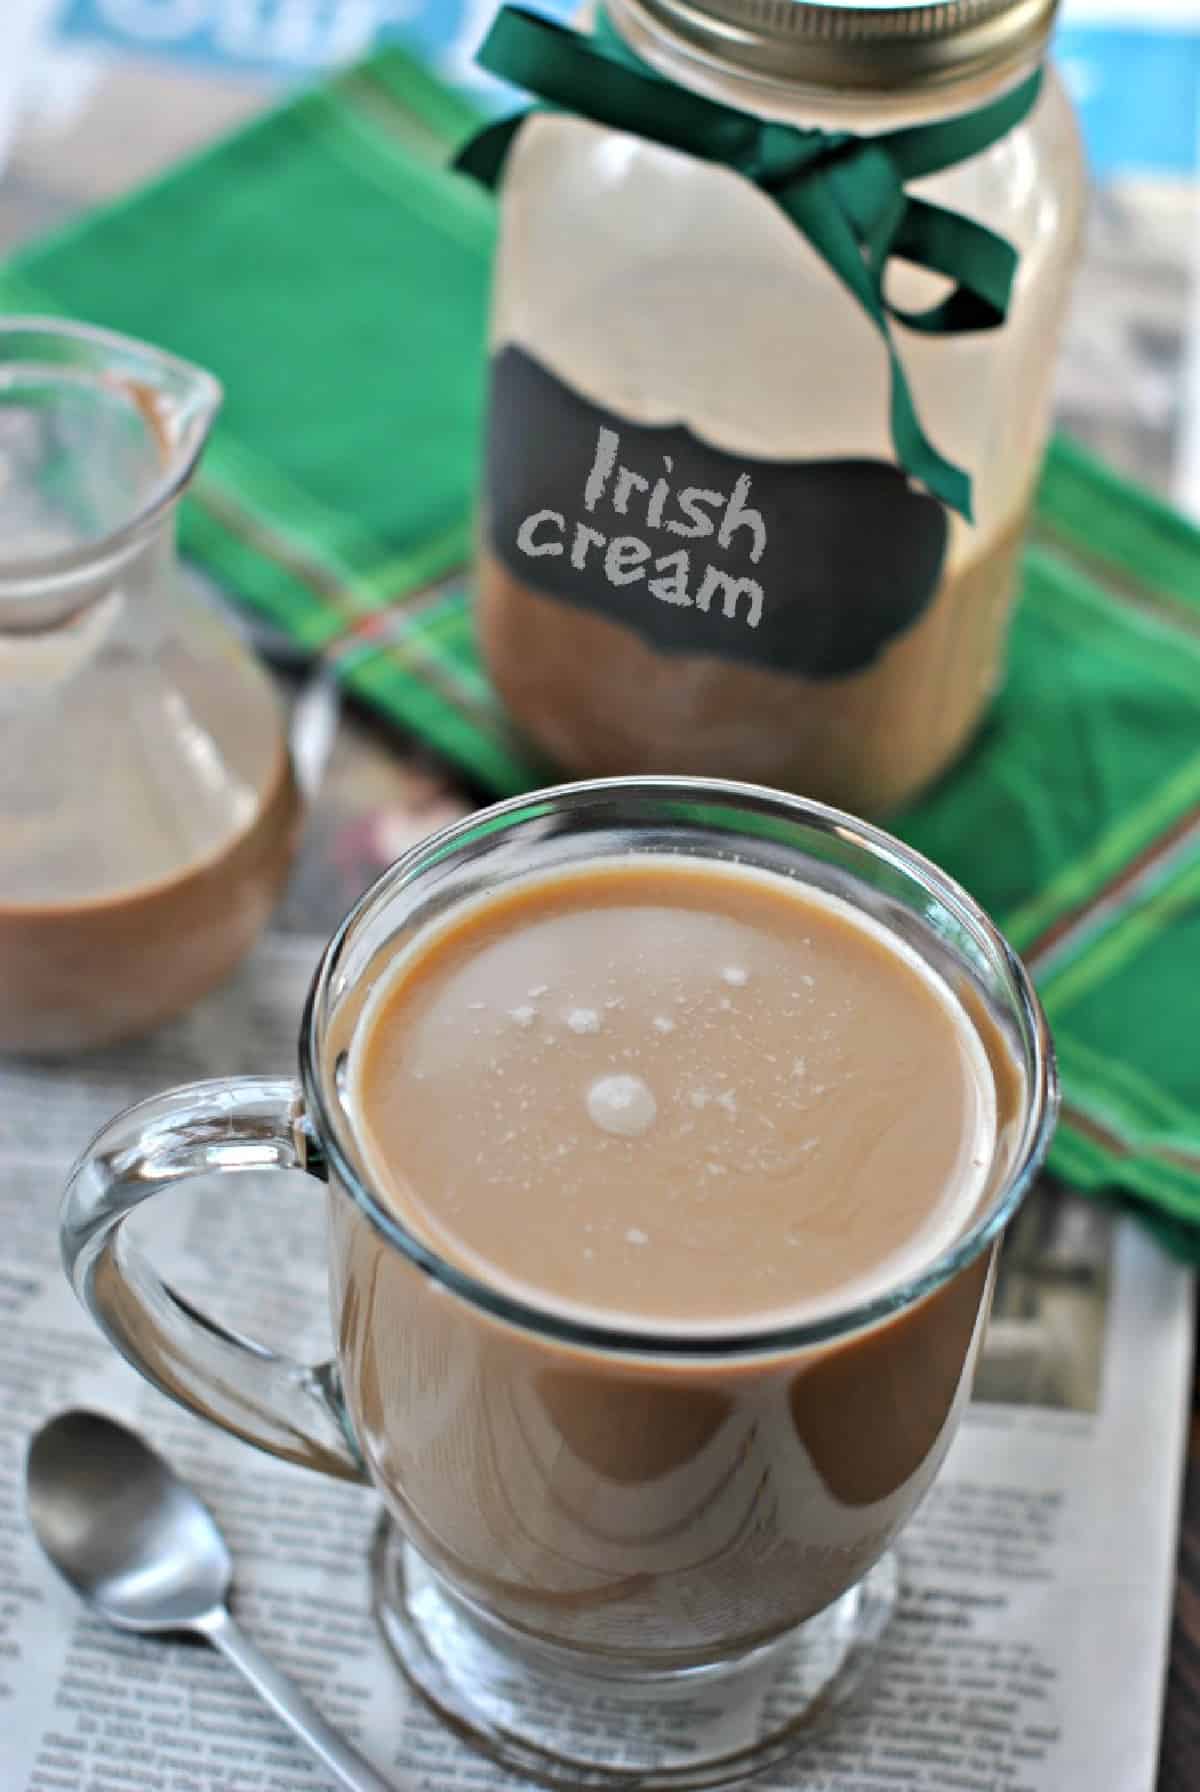 Irish cream coffee creamer in a mason jar with a mug of coffee.